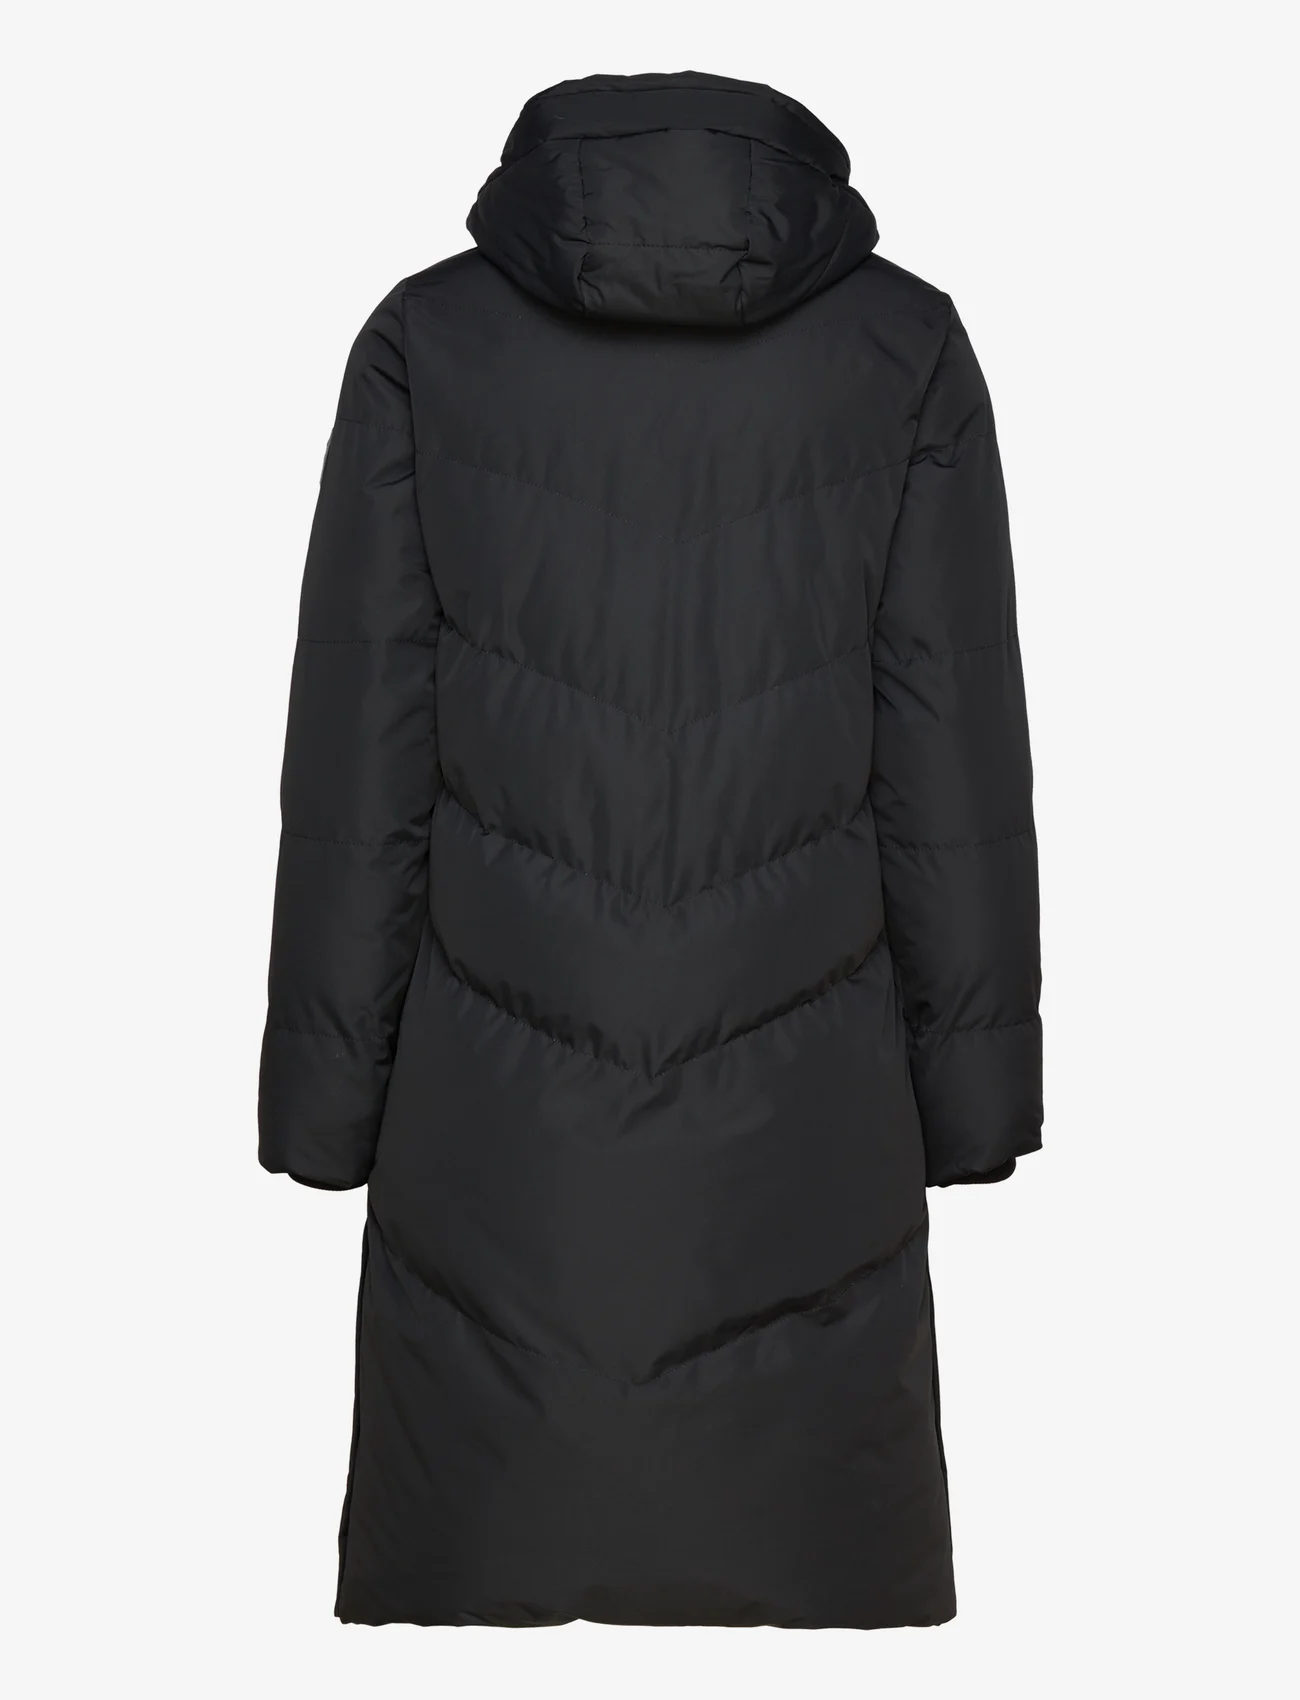 Garcia - ladies outdoor jackets - winterjacken - black - 1